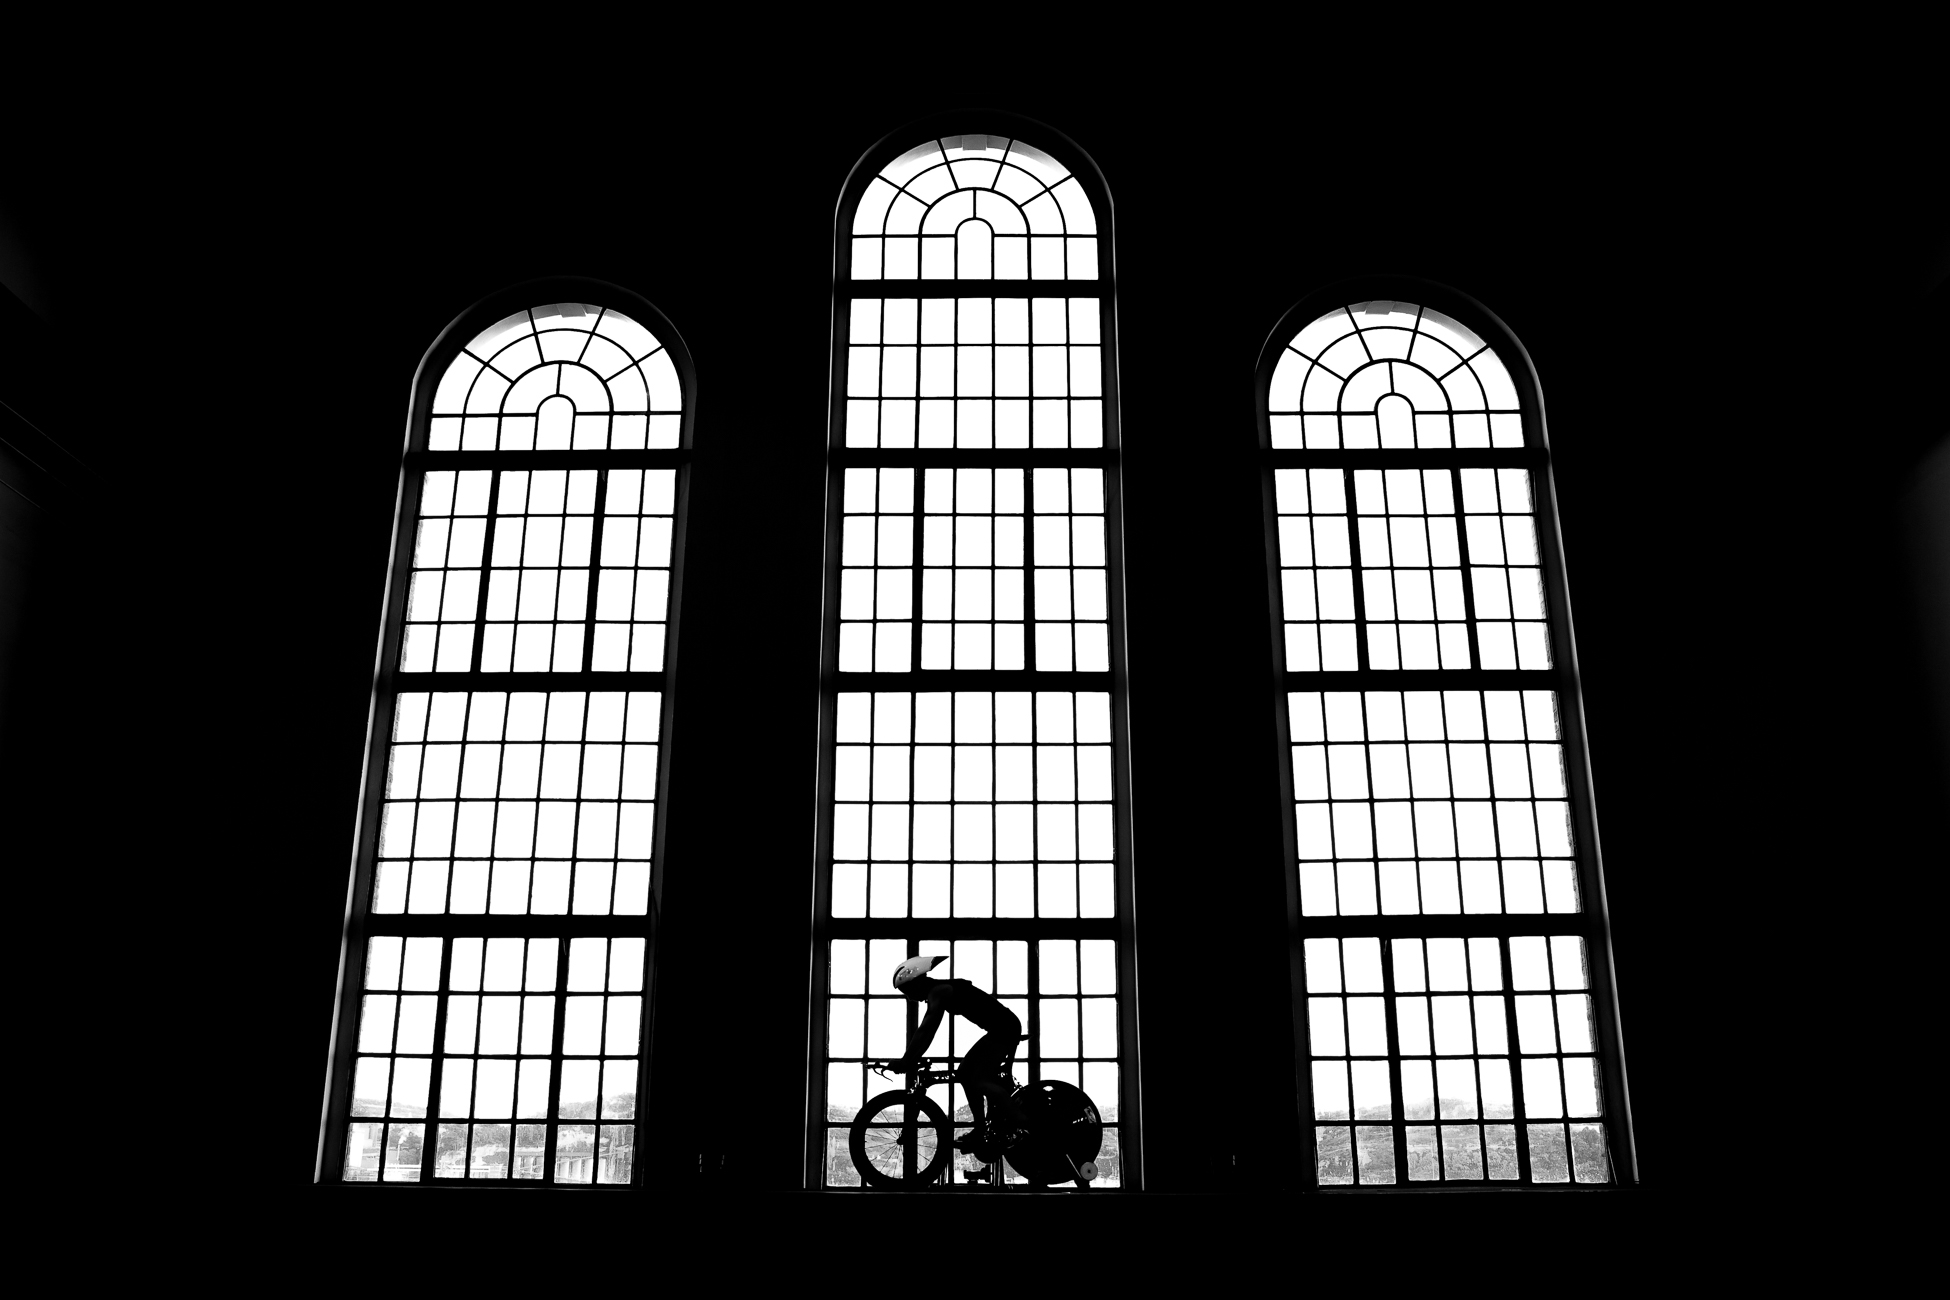 Gonçalo Barriga Photographer - Portrait of Triathlete Riding Bike